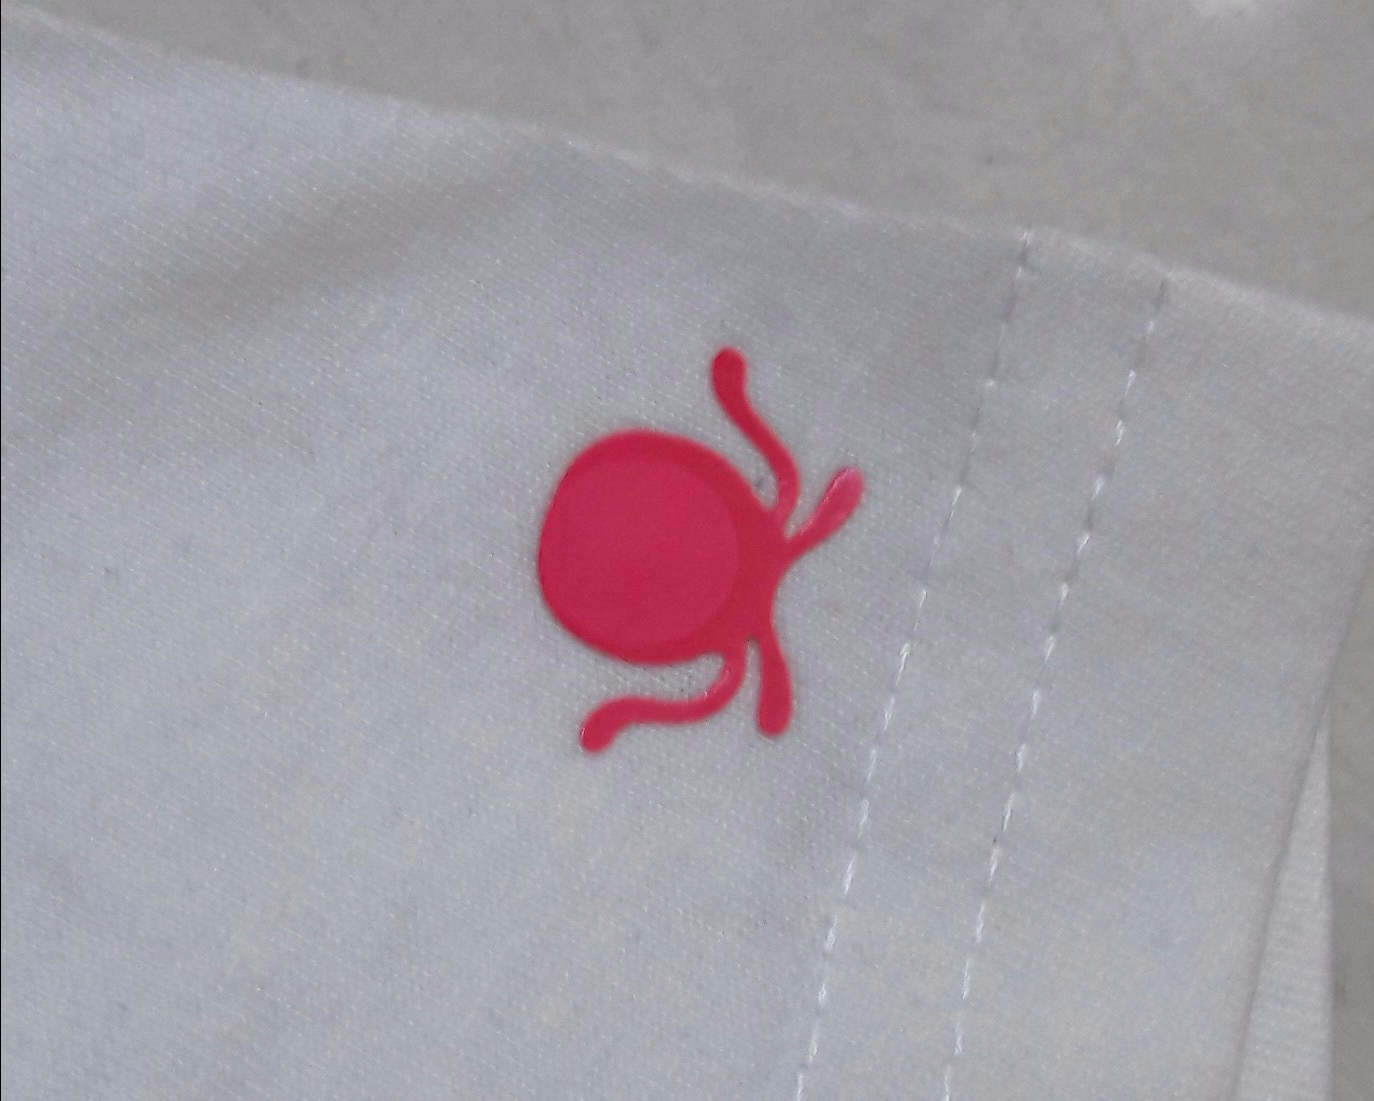 The printOctopus logo